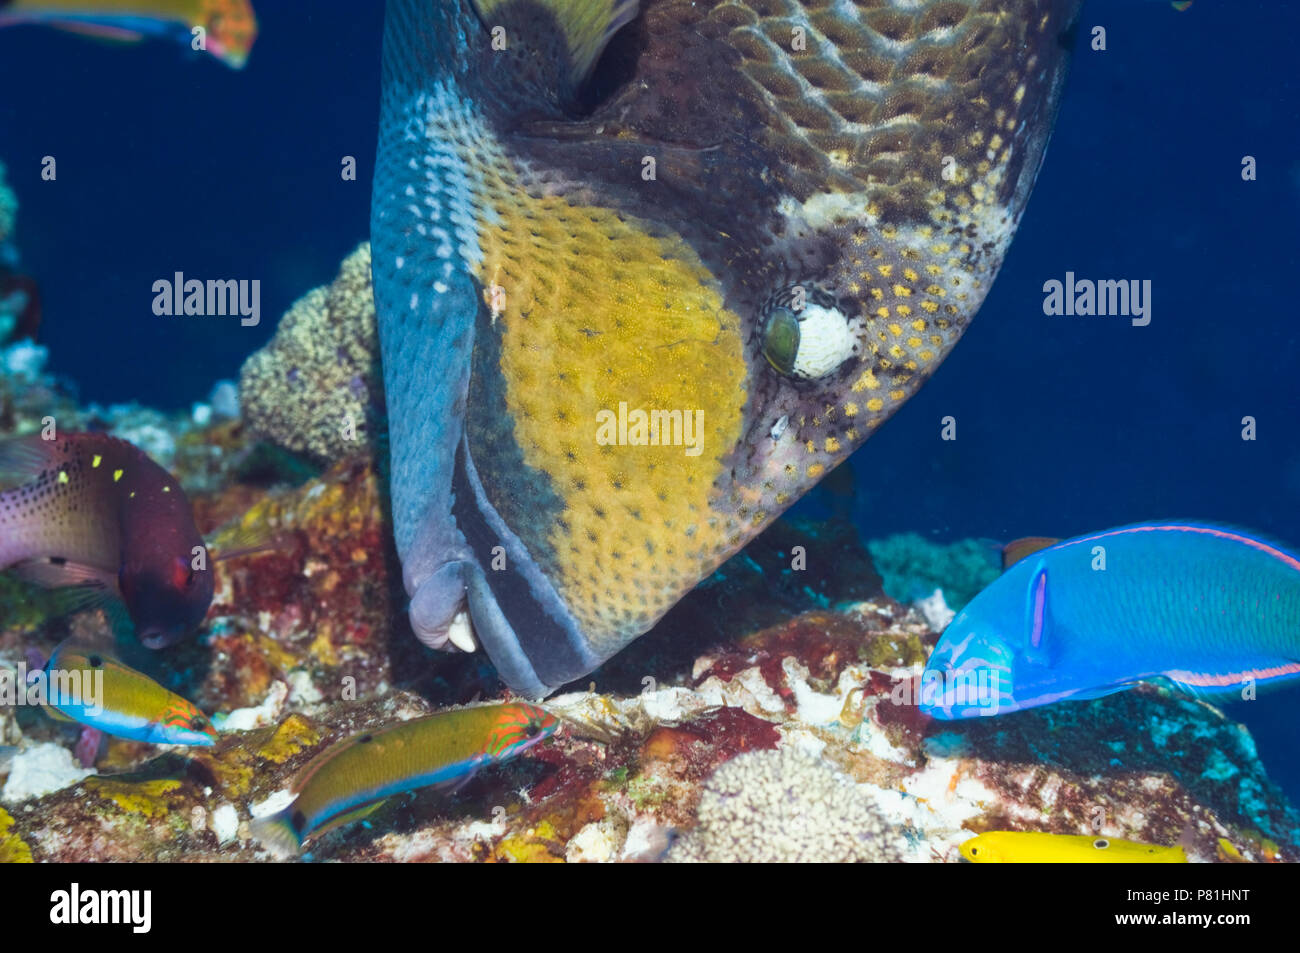 Titan triggerfish (Balistoides viridescens) feeding on coral rock.  Raja Ampat, West Papua, Indonesia. Stock Photo